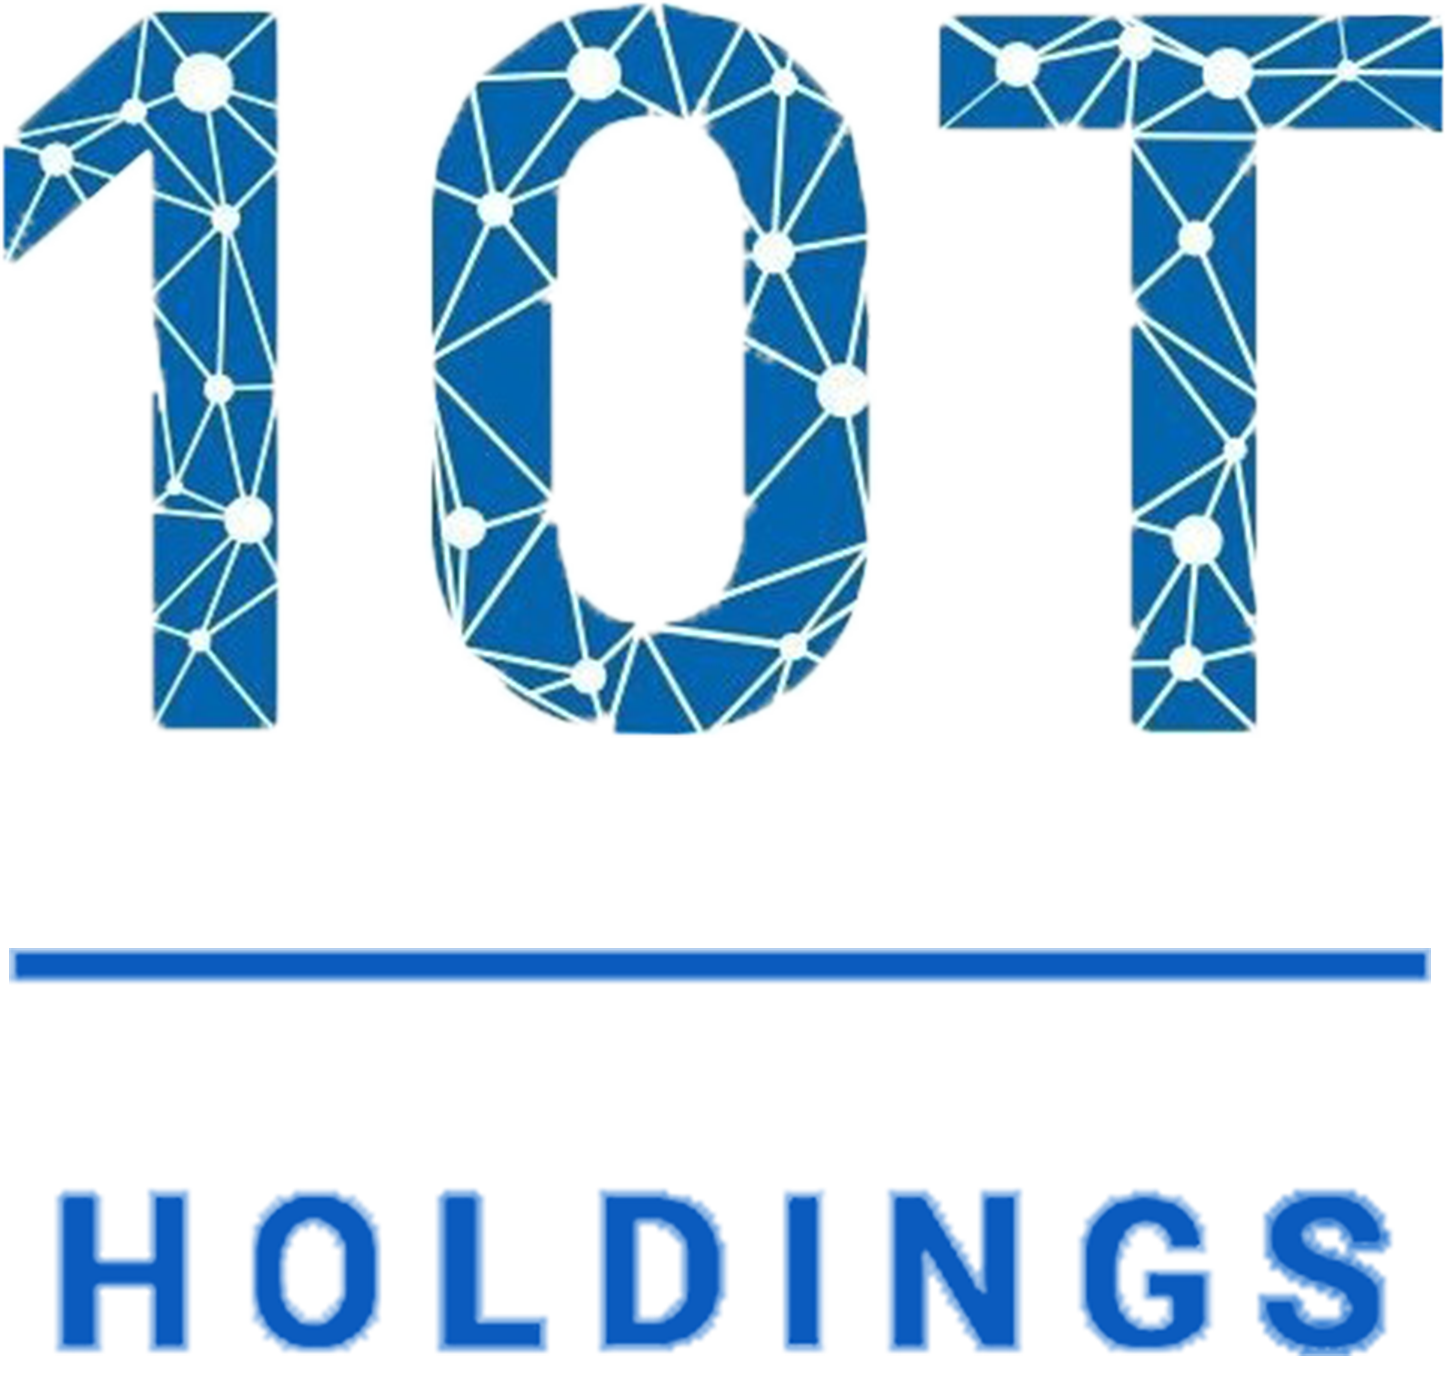 10T Holdings | Lead investor